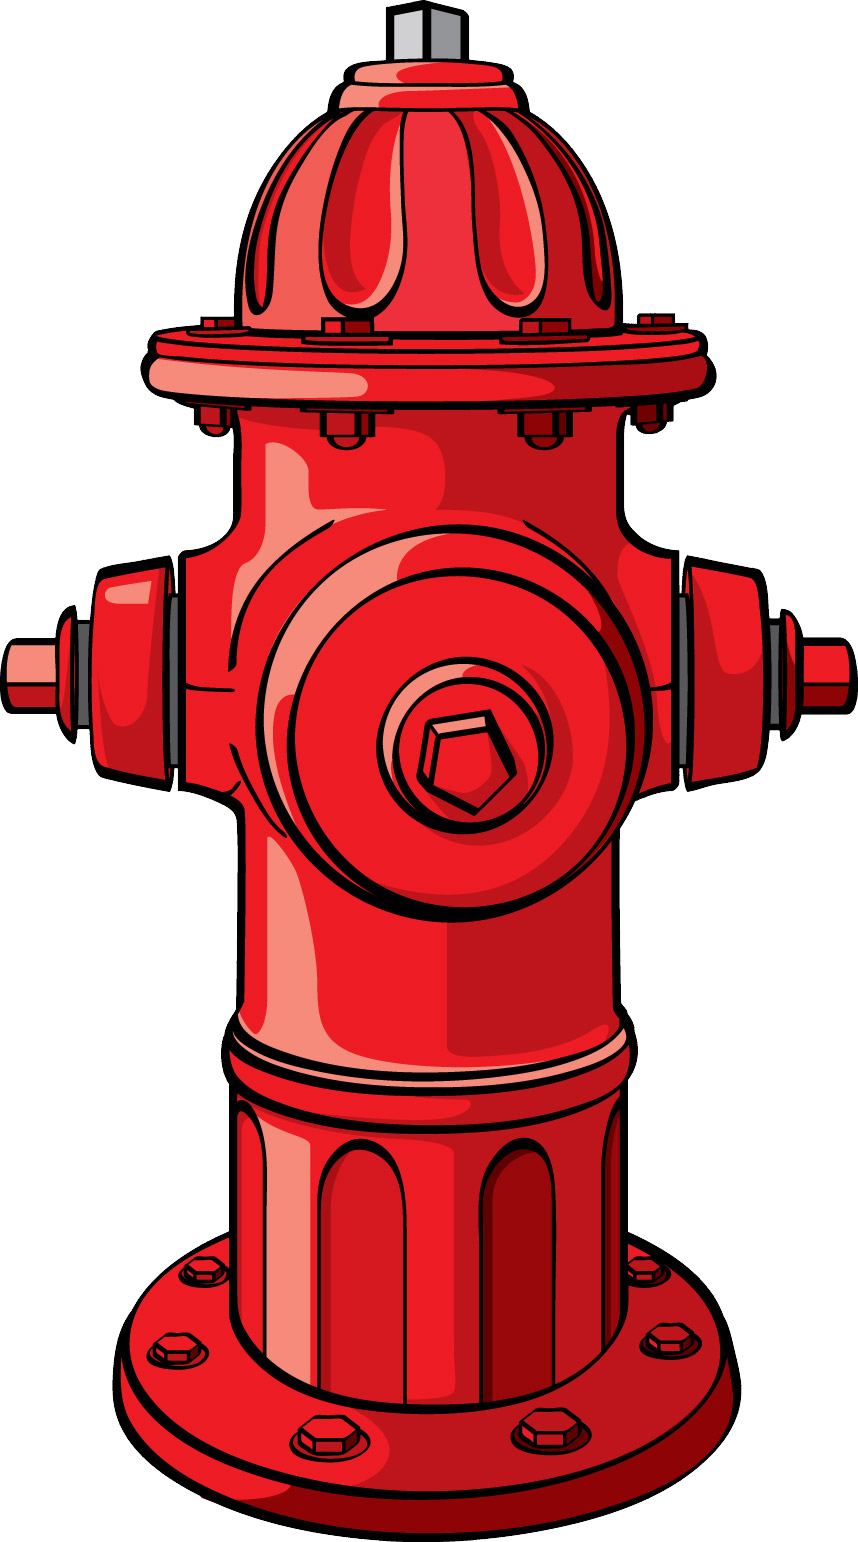 fire hydrant vector graphic